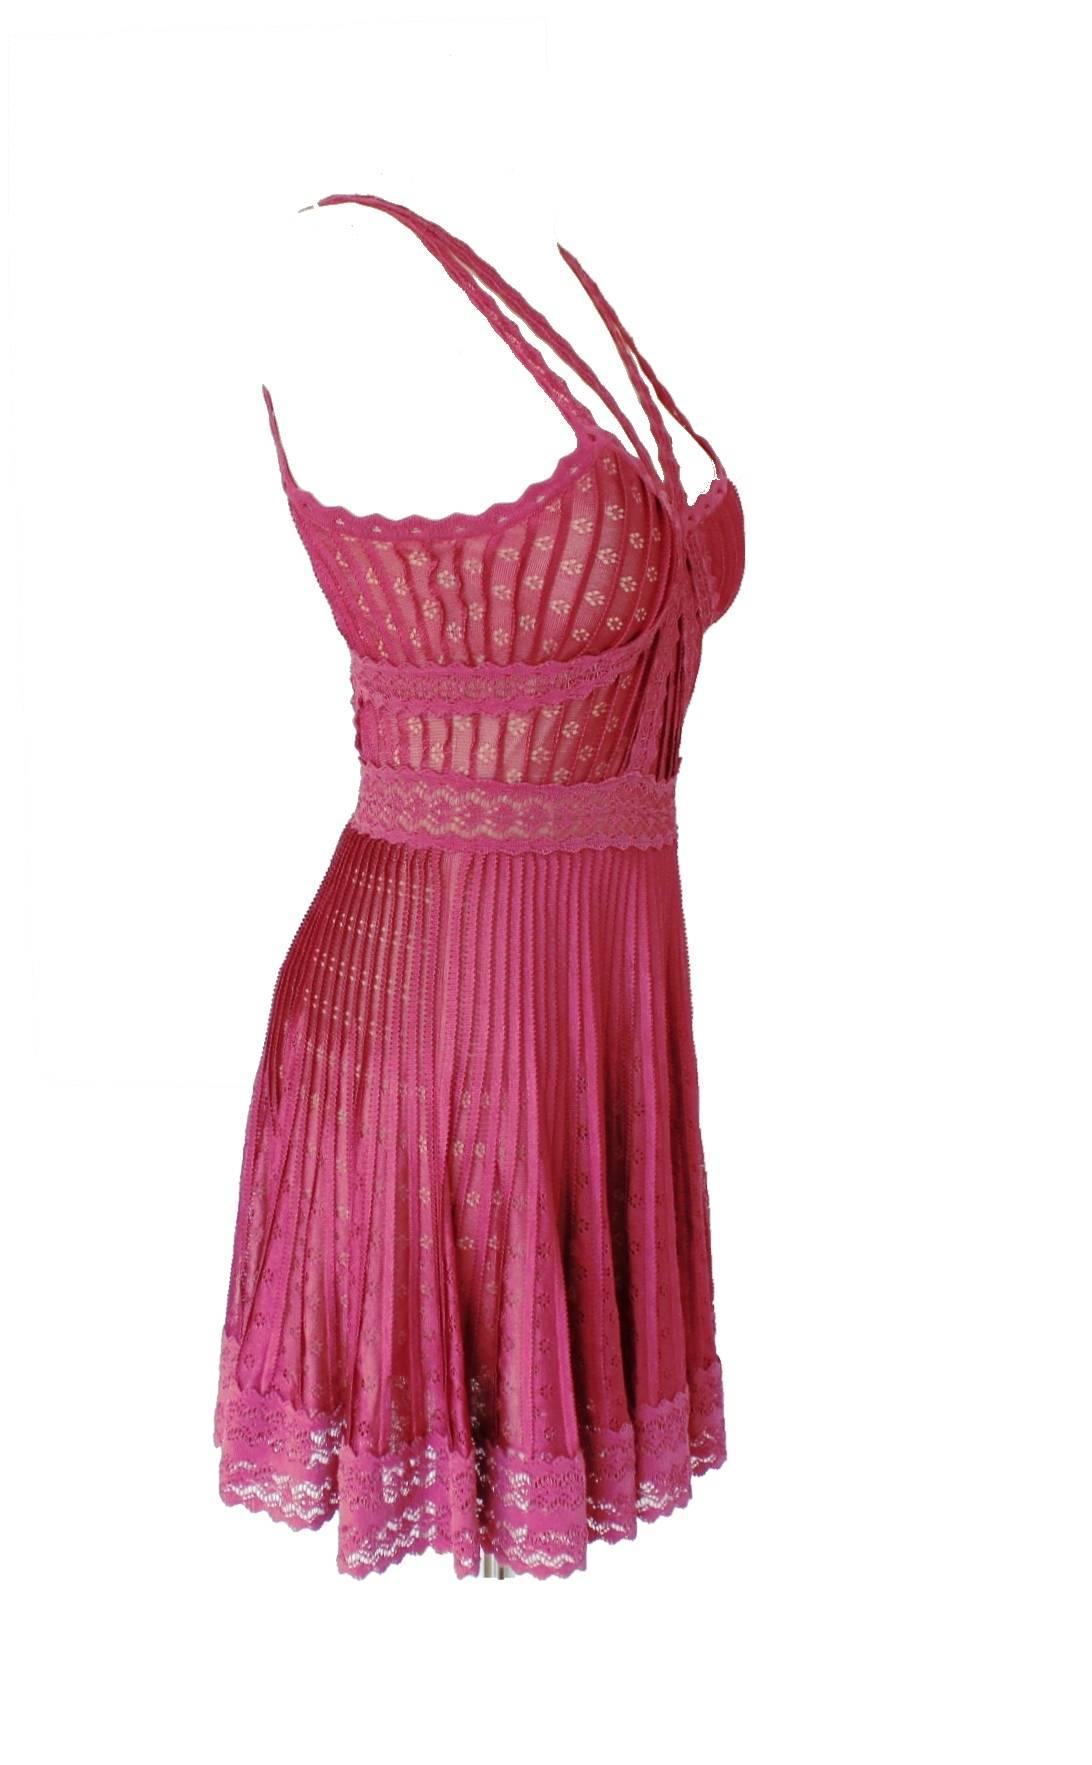 Pink Christian Dior Fuchsia Crochet Knit Detail Cocktail Dress